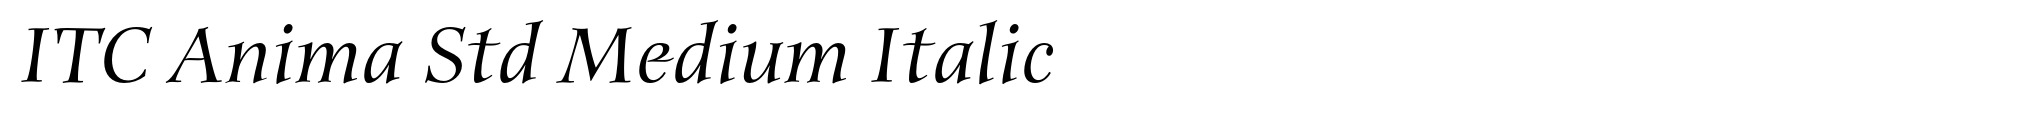 ITC Anima Std Medium Italic image